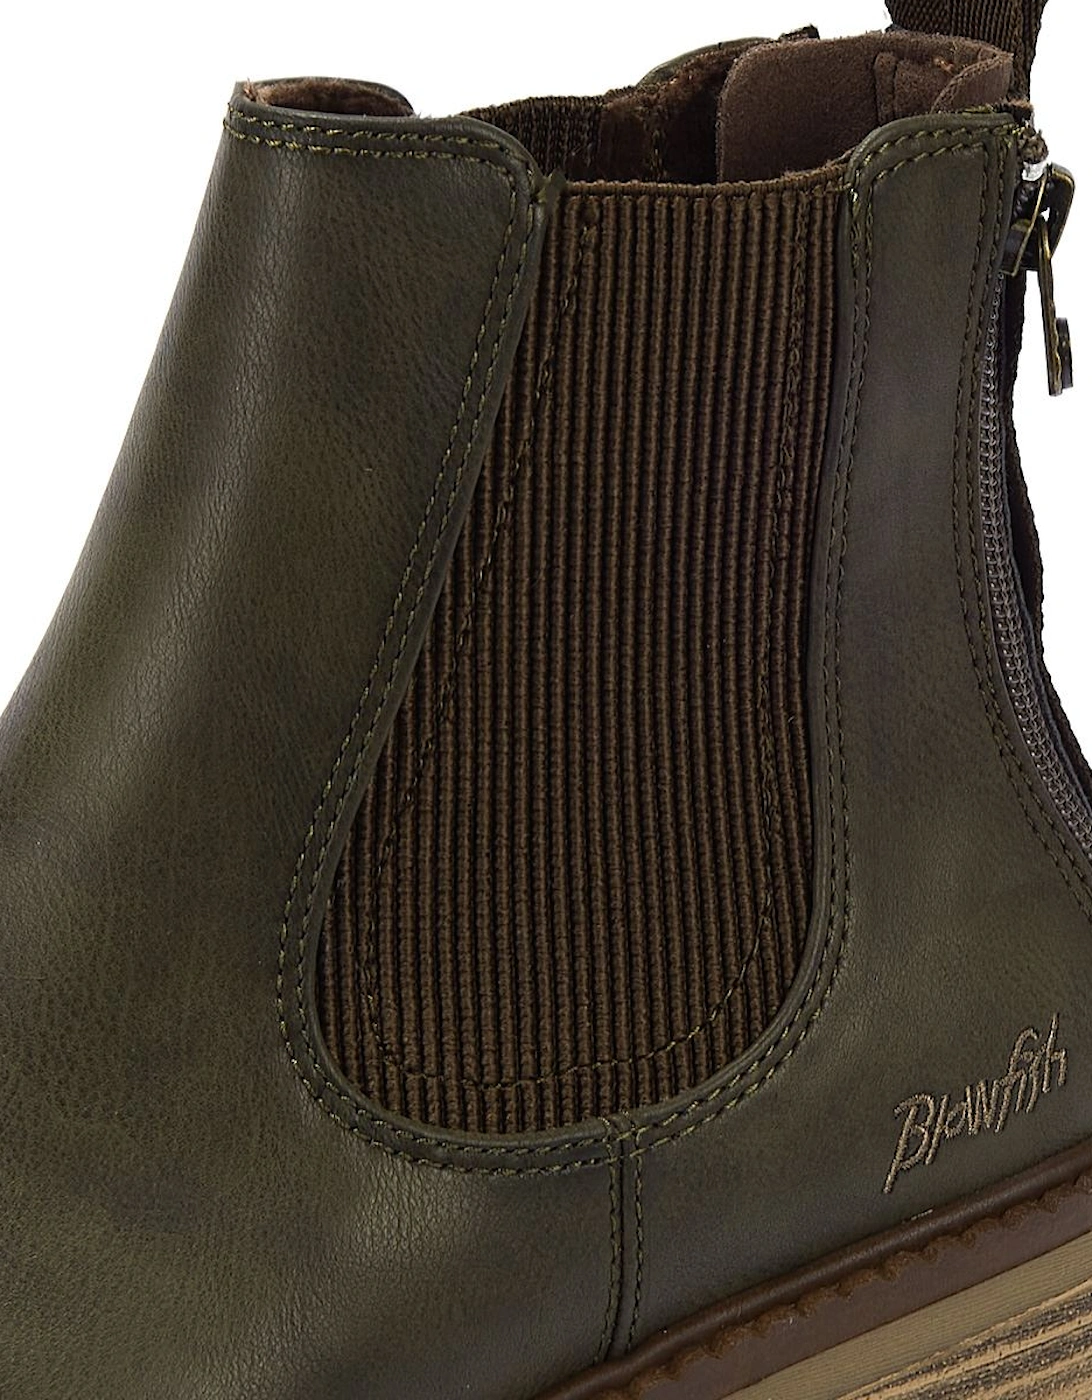 Vedder Women's Olive Boots